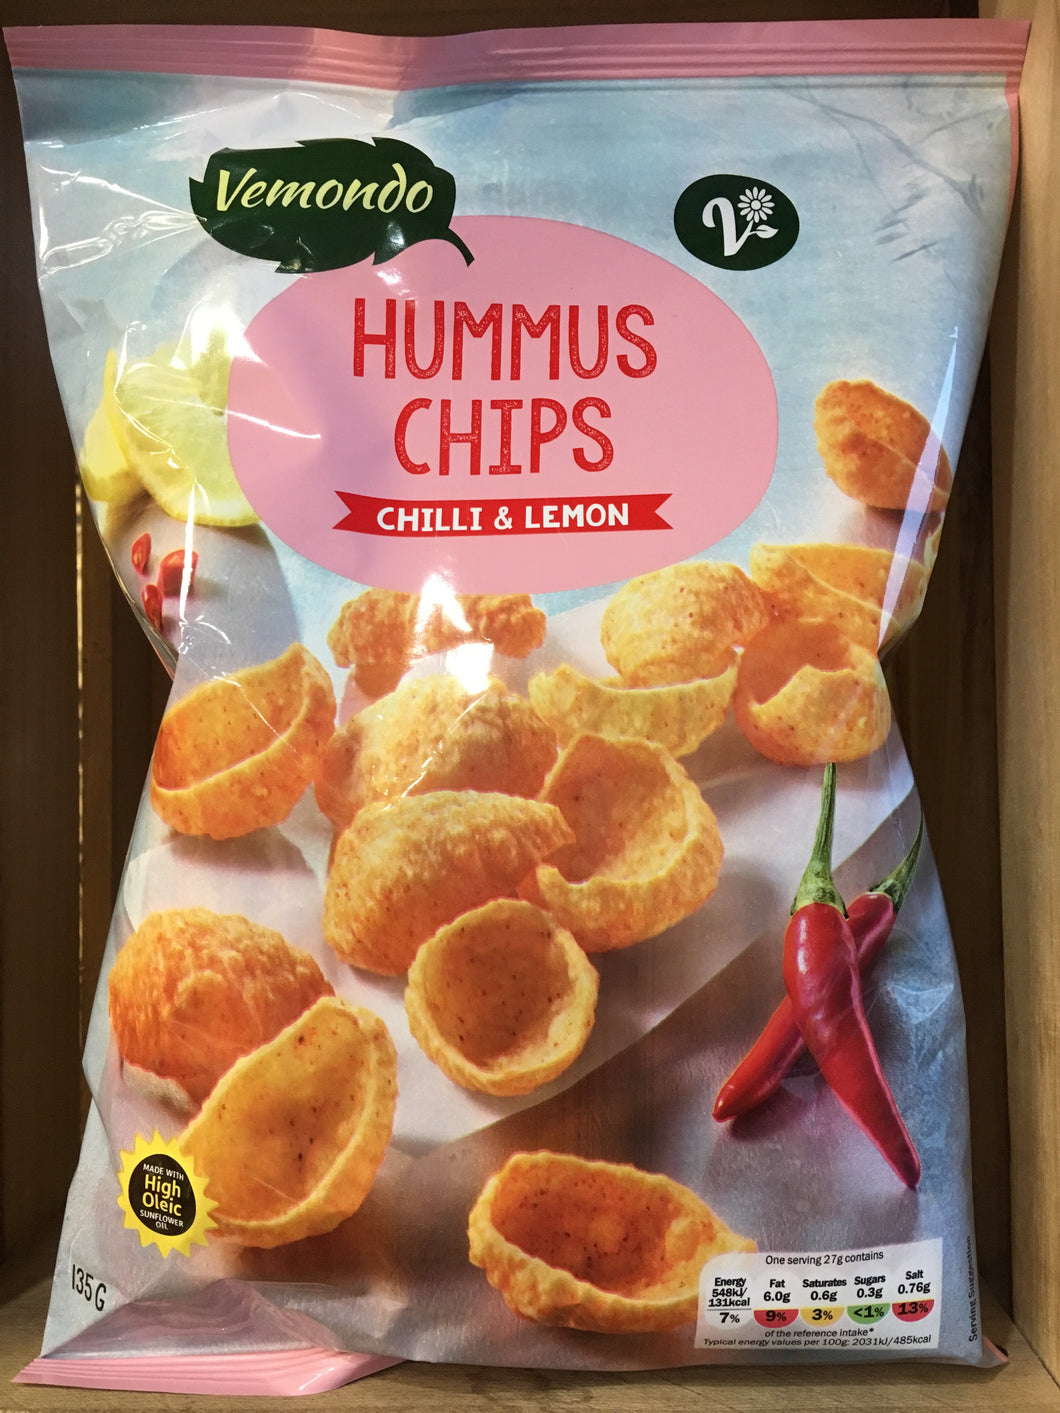 Vemondo Hummus Chilli & Lemon Chips 135g